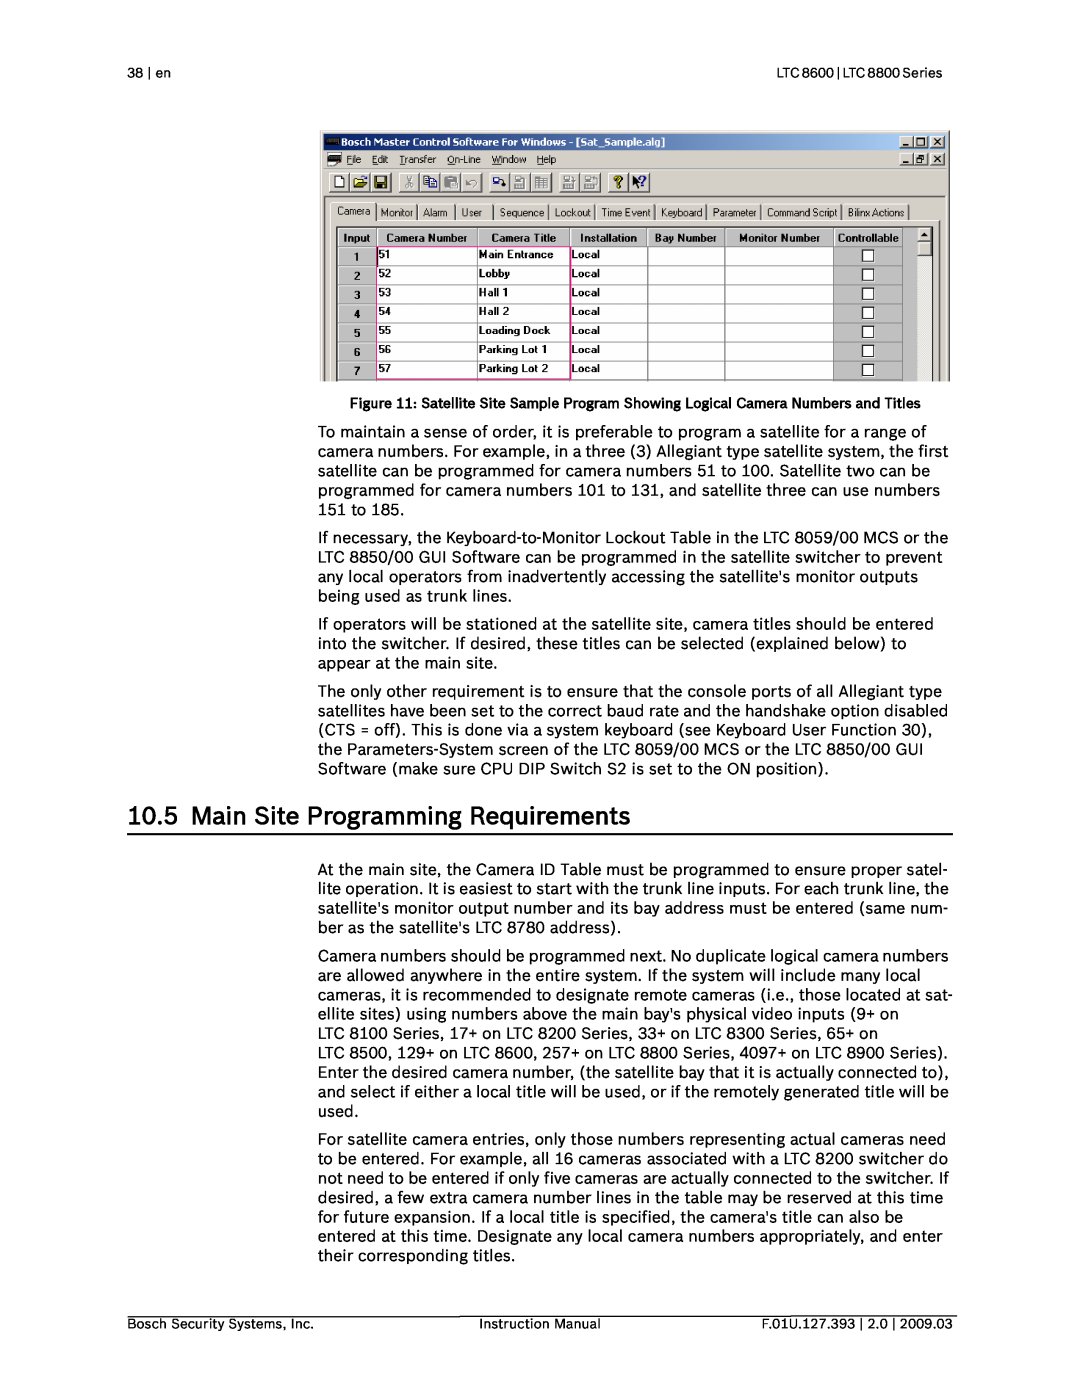 Bosch Appliances LTC 8600 Main Site Programming Requirements, 38 | en, Bosch Security Systems, Inc, Instruction Manual 